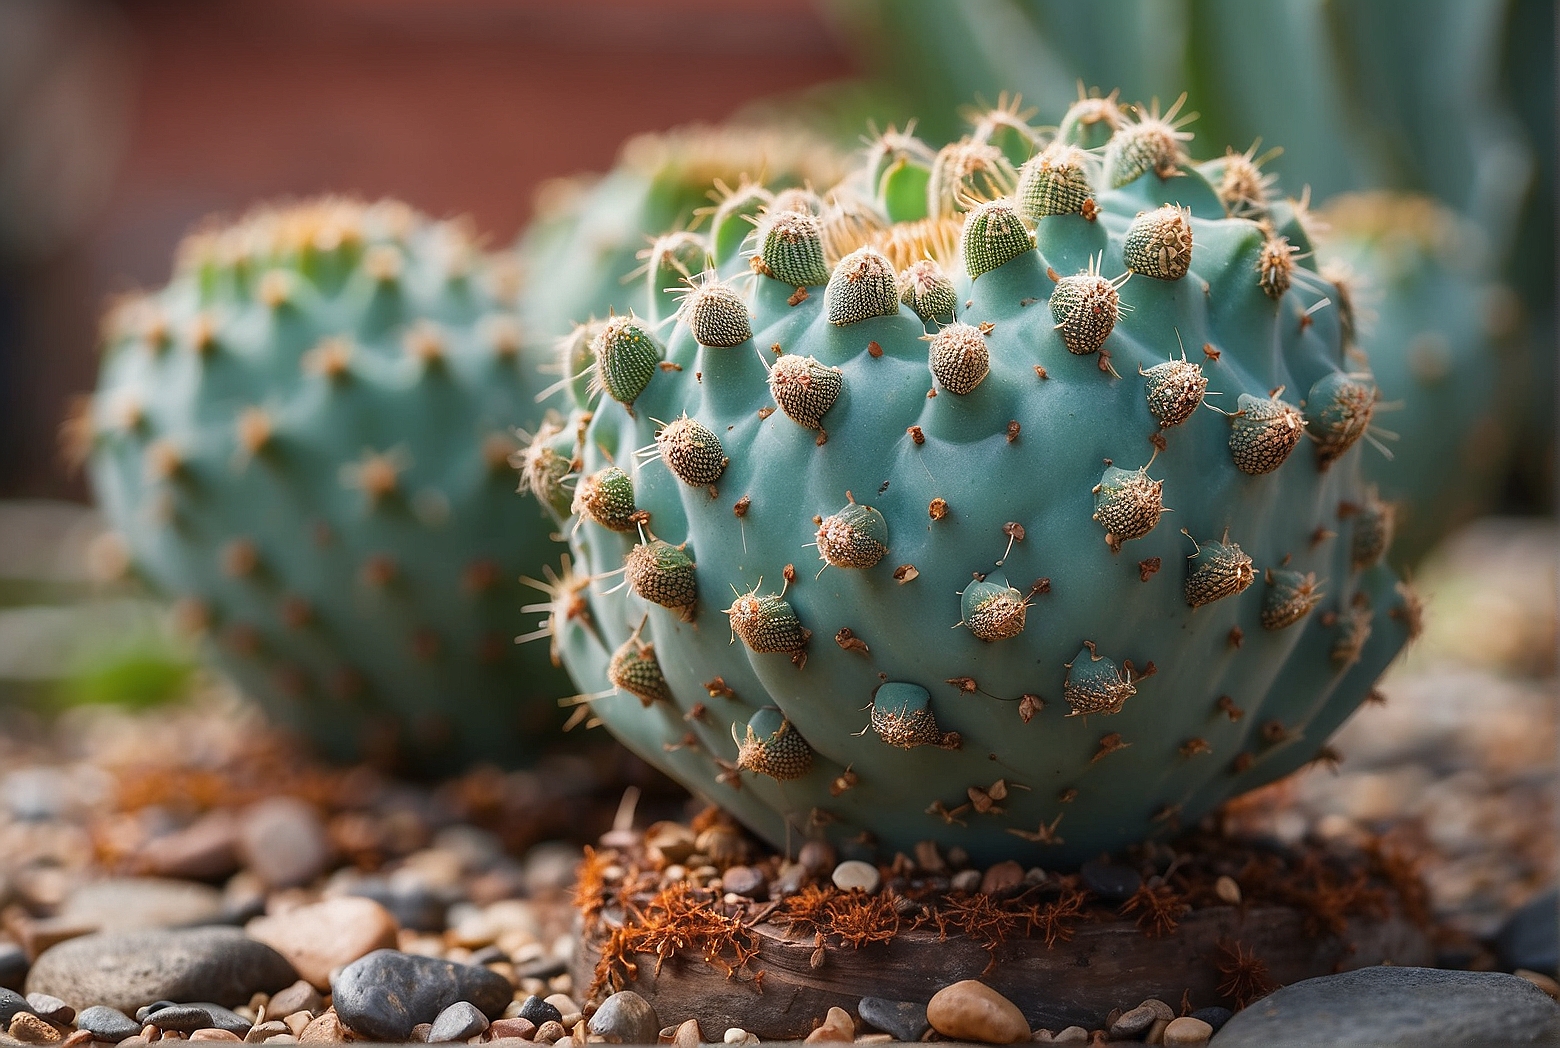 A Beginner’s Guide to Pruning Peyote Cactus